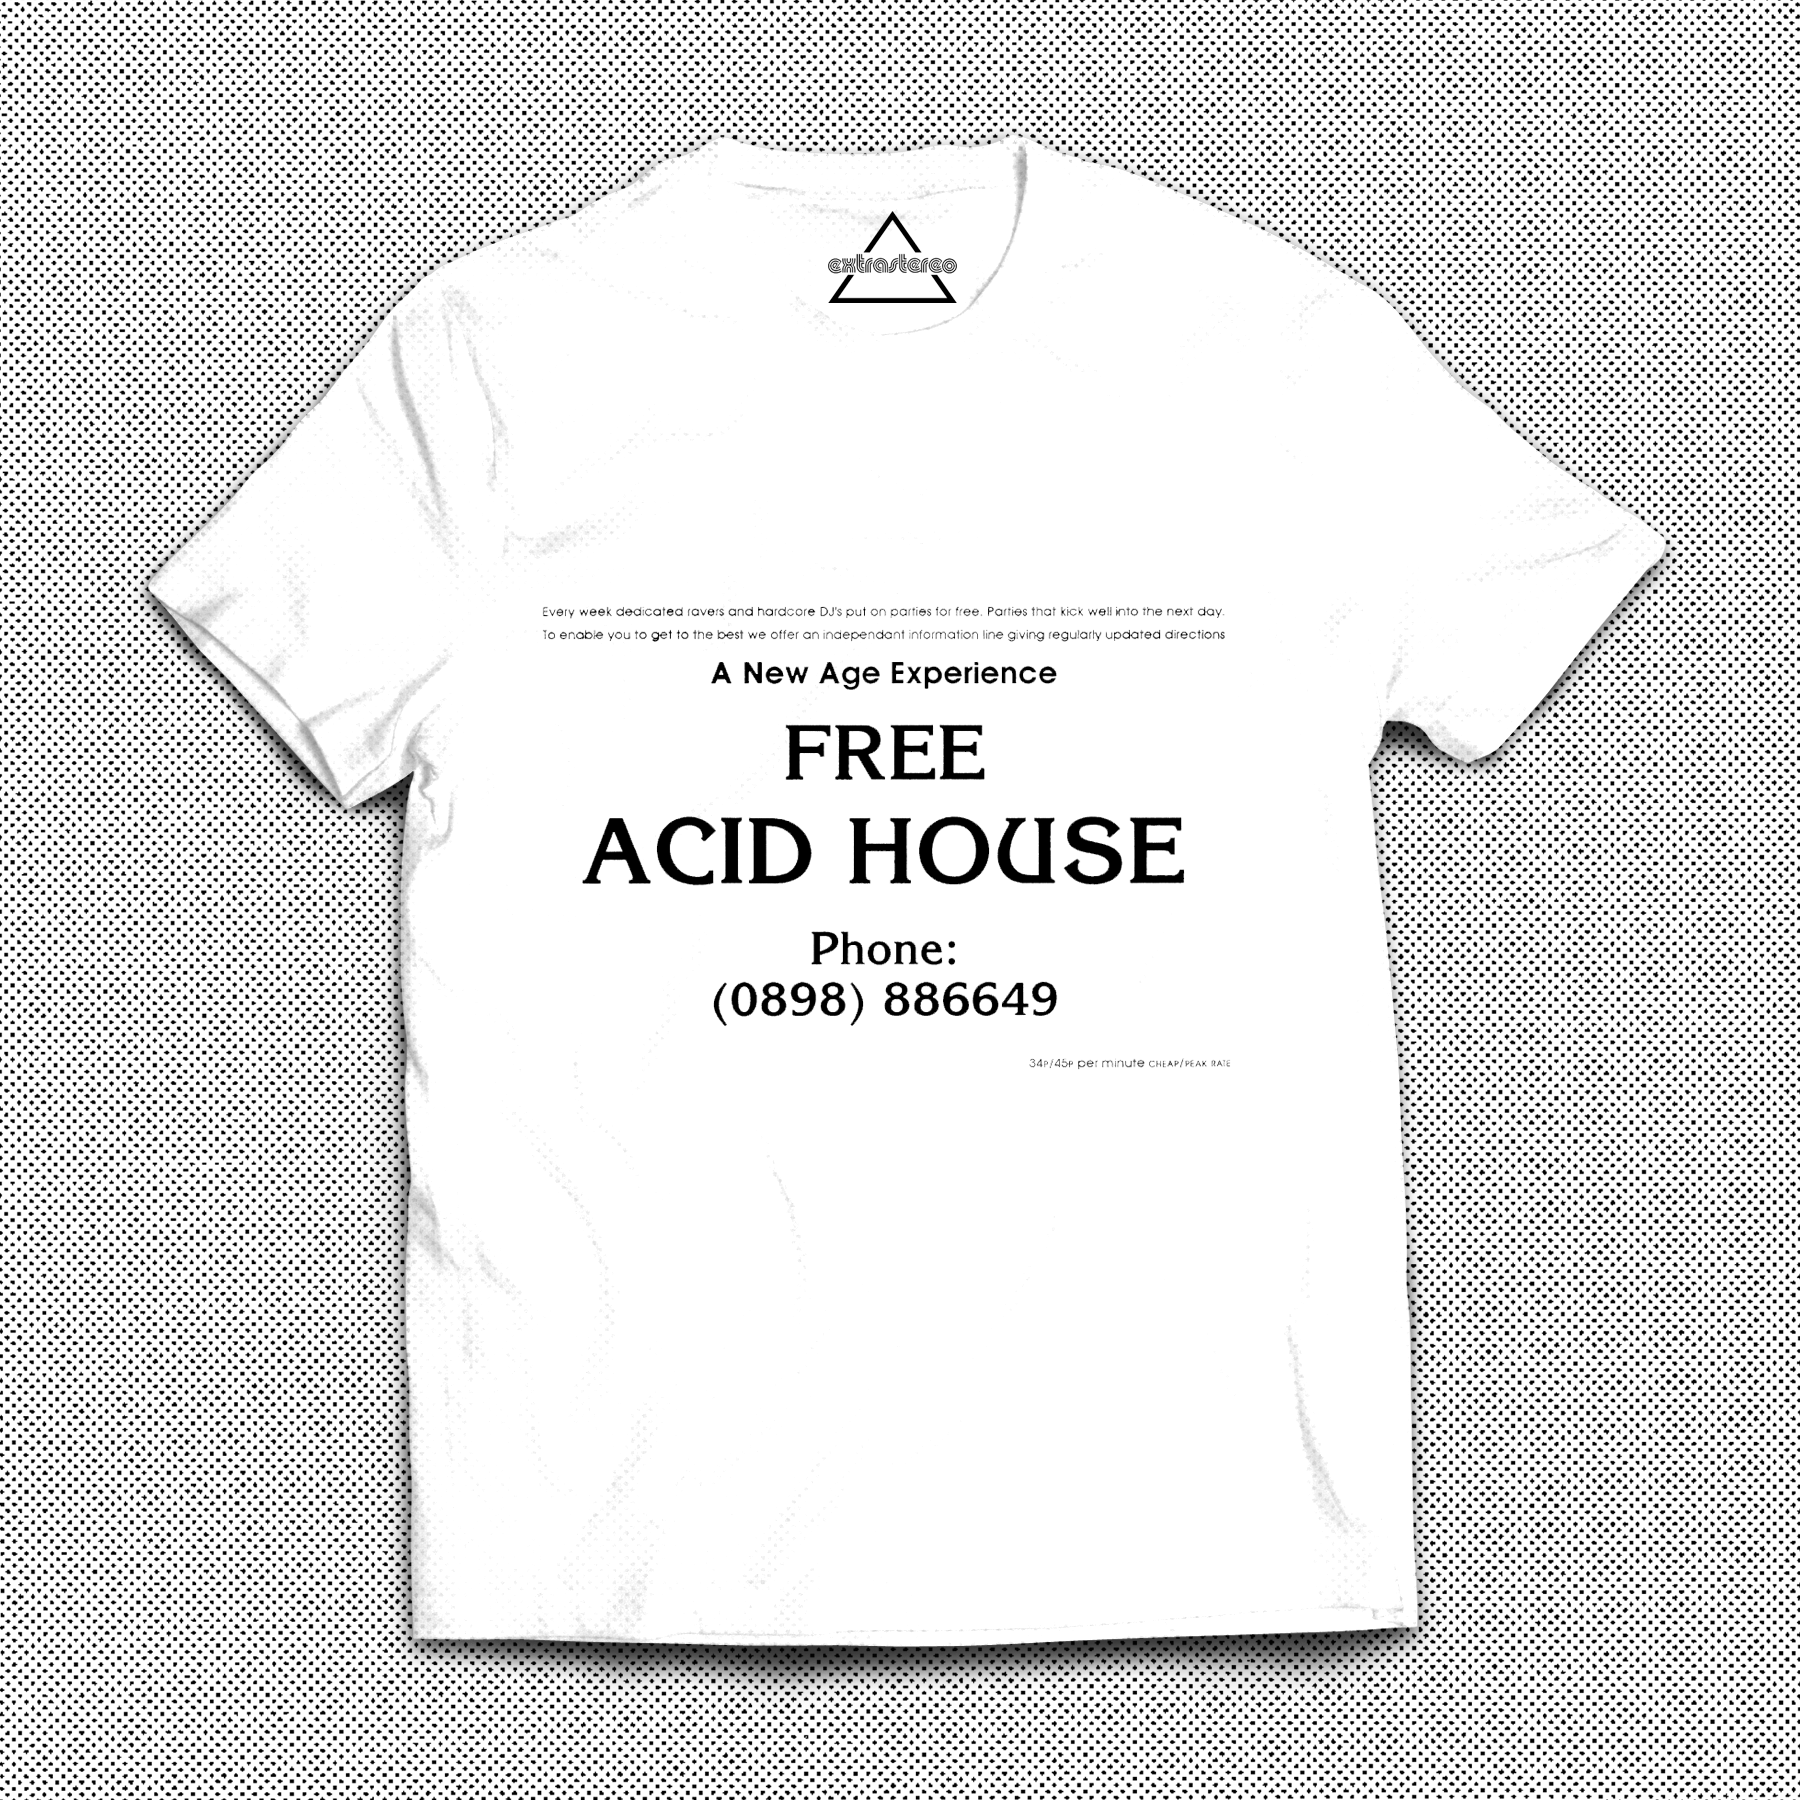 extrastereo - 'Free Acid House' T-shirt